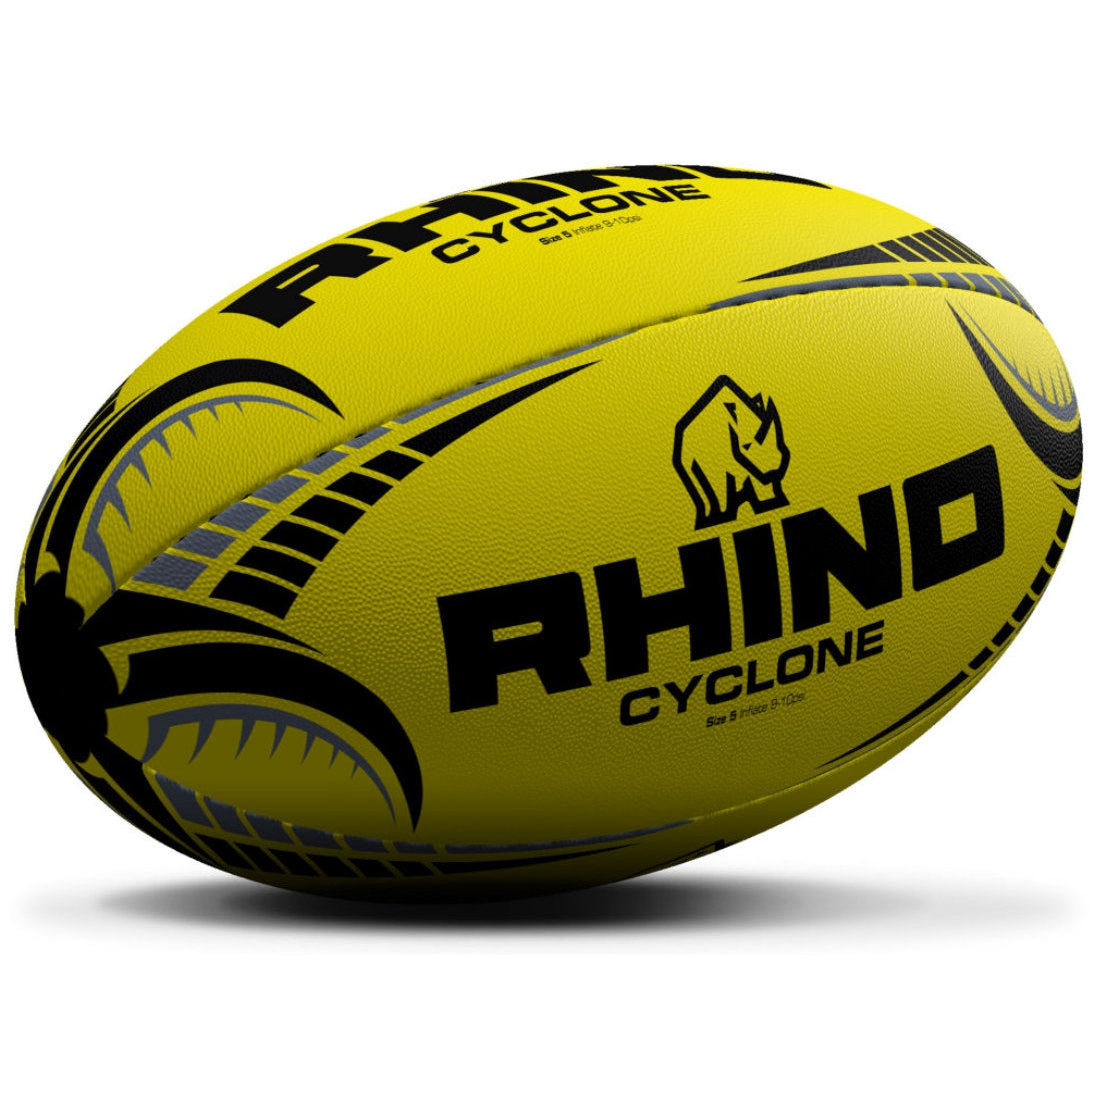 Rhino Rugby Ball Cyclone Yellow - Size 4